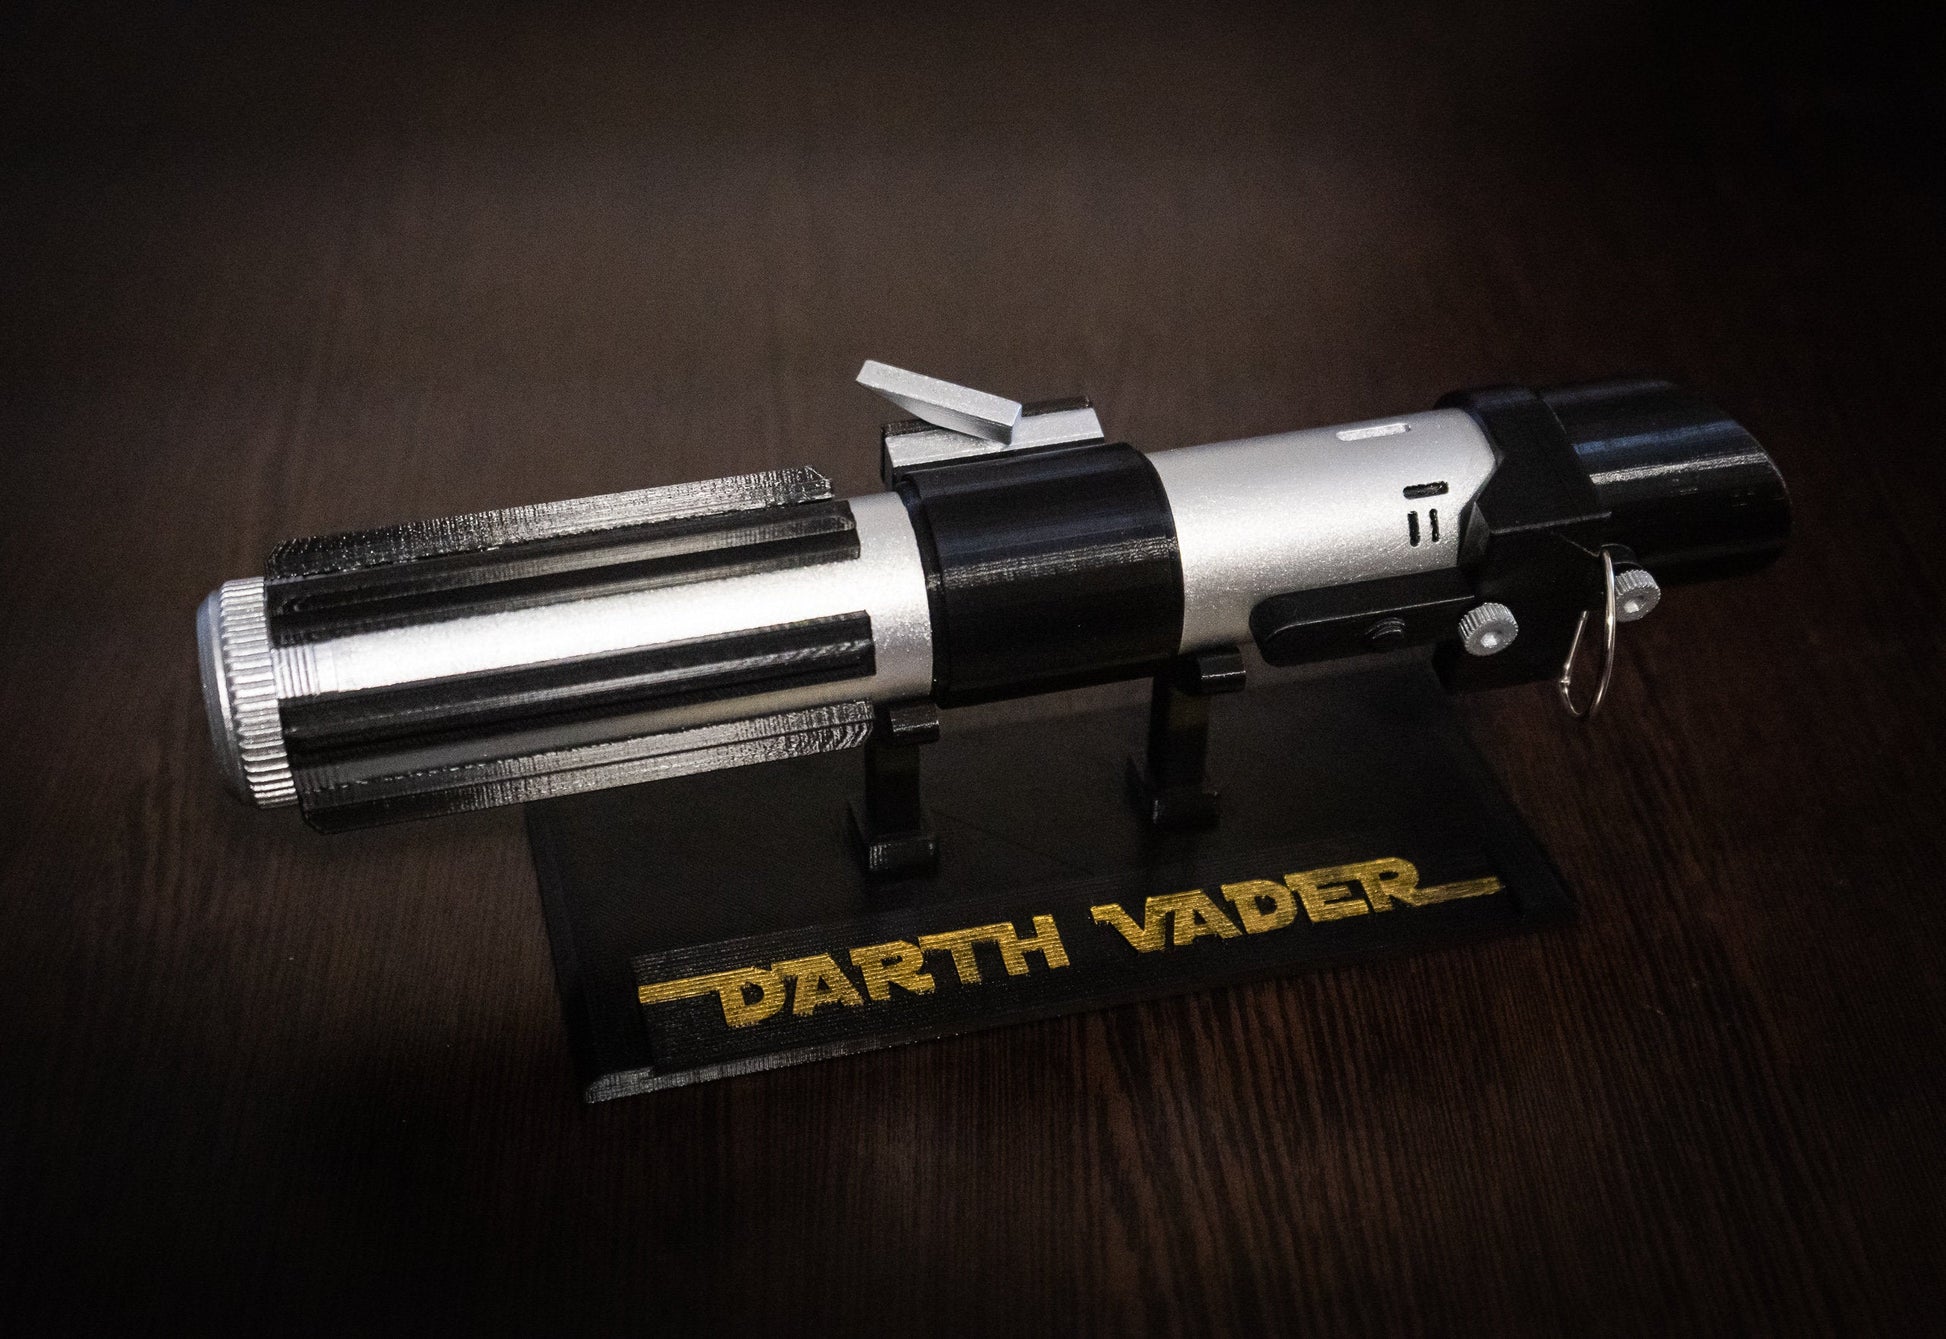 Darth Vader  Lightsaber | Star Wars Cosplay Prop - 3DPrintProps